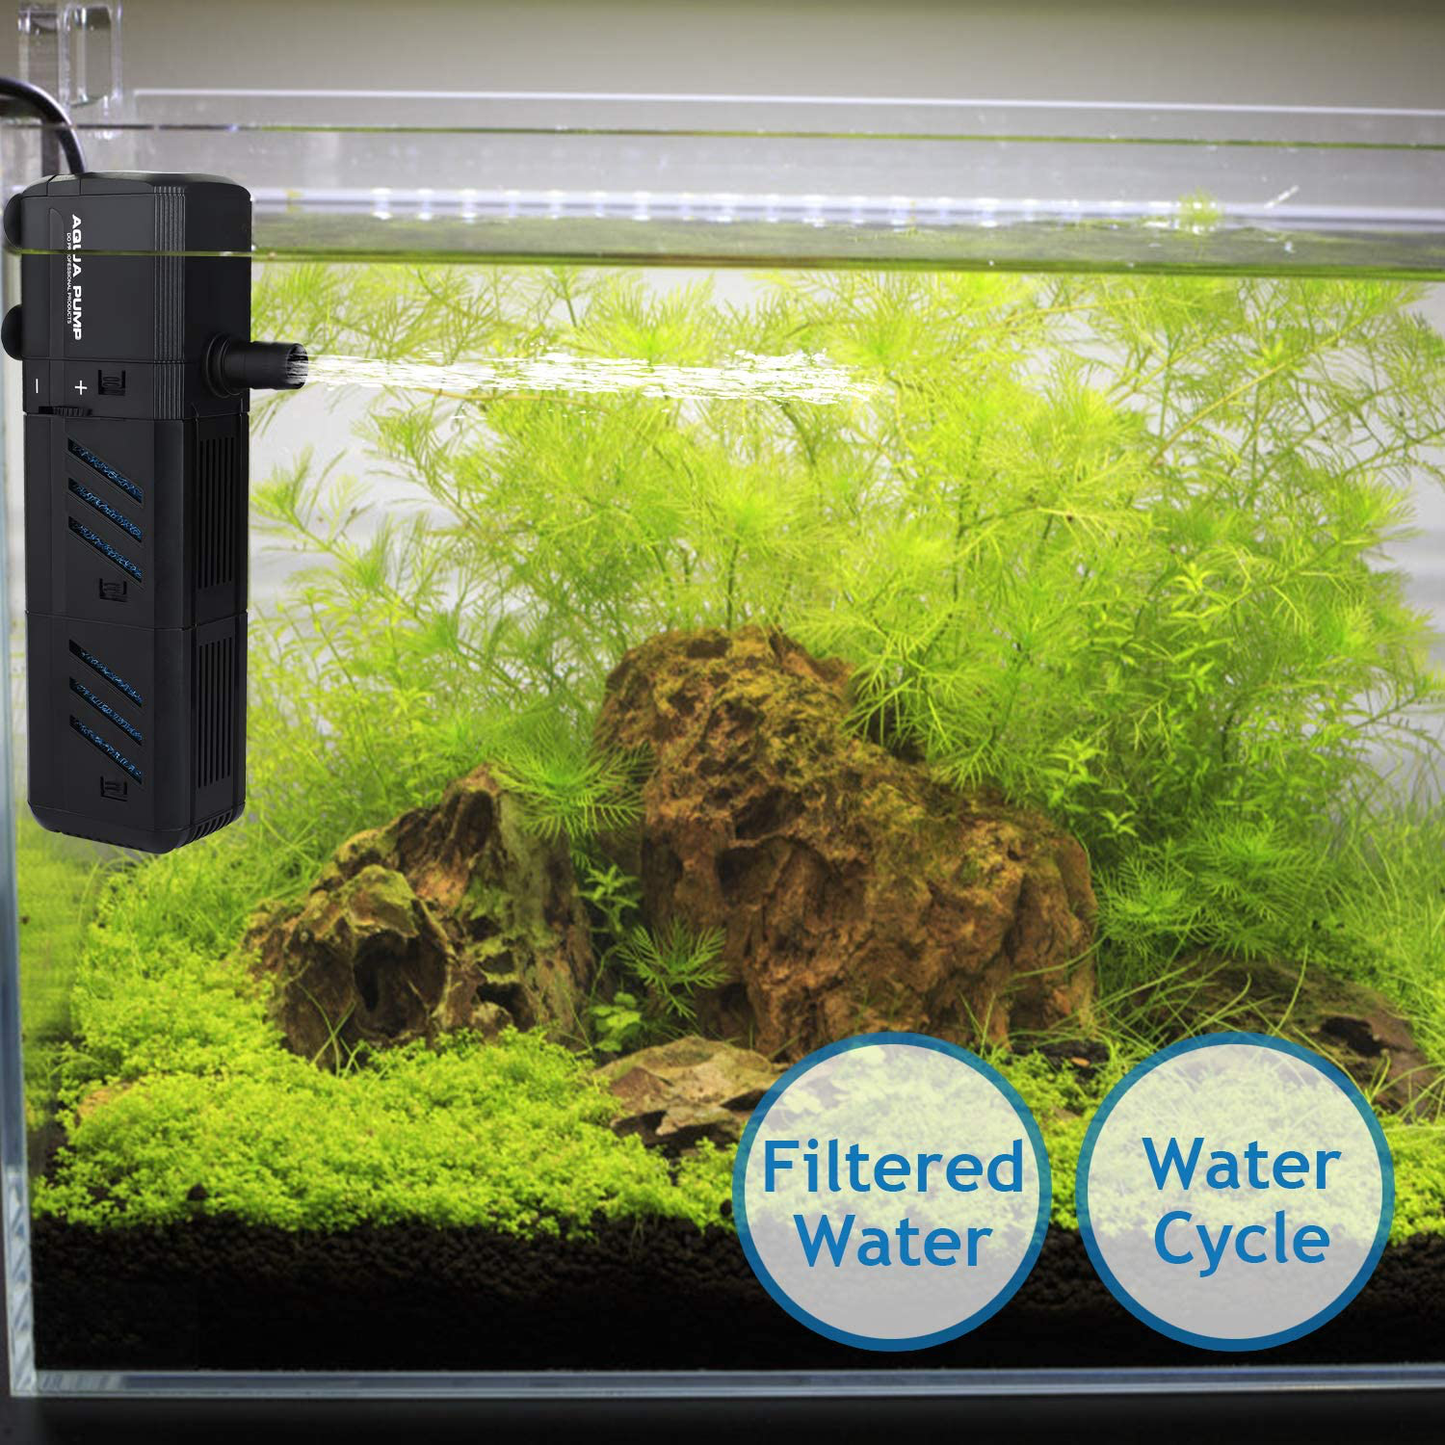 NO.17 Submersible Aquarium Internal Filter, Adjustable Fish Tank Filter with Water Pump for Fish Tank